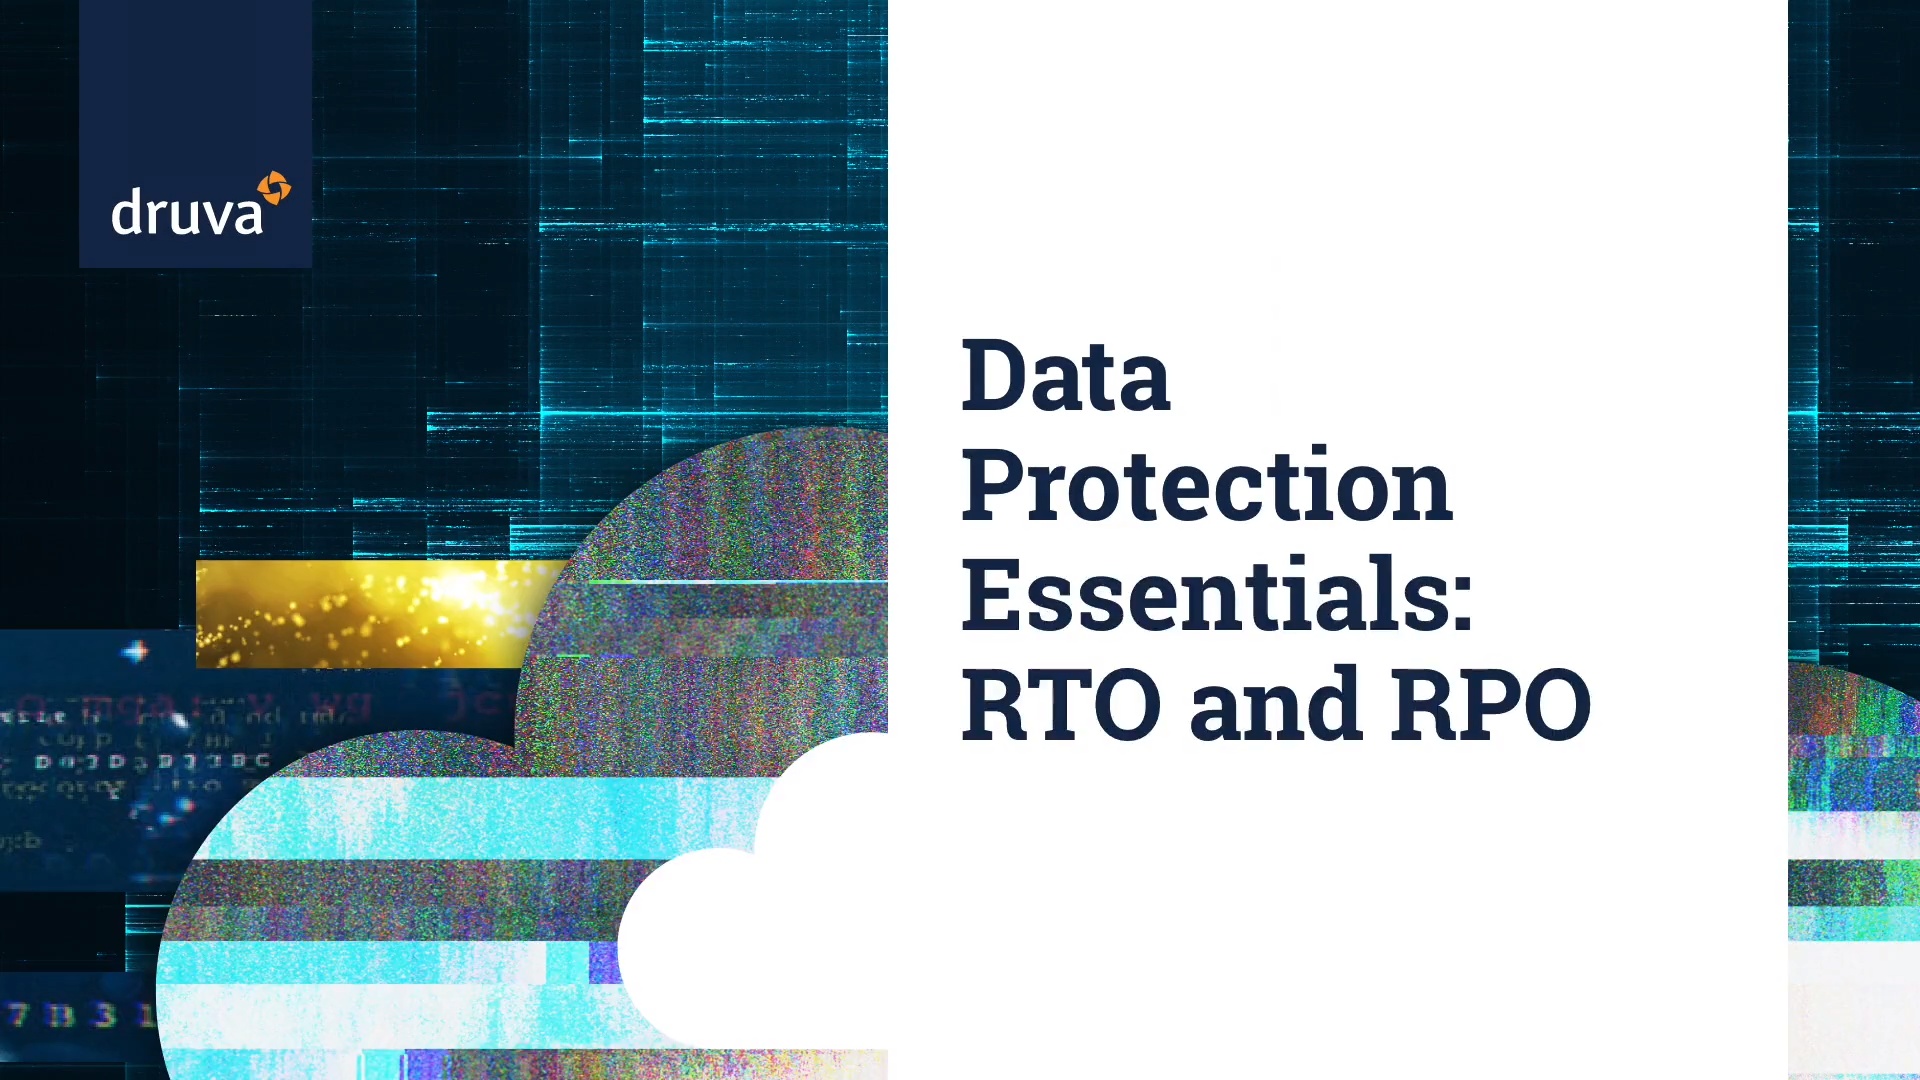 Data Protection Essentials: RTO and RPO